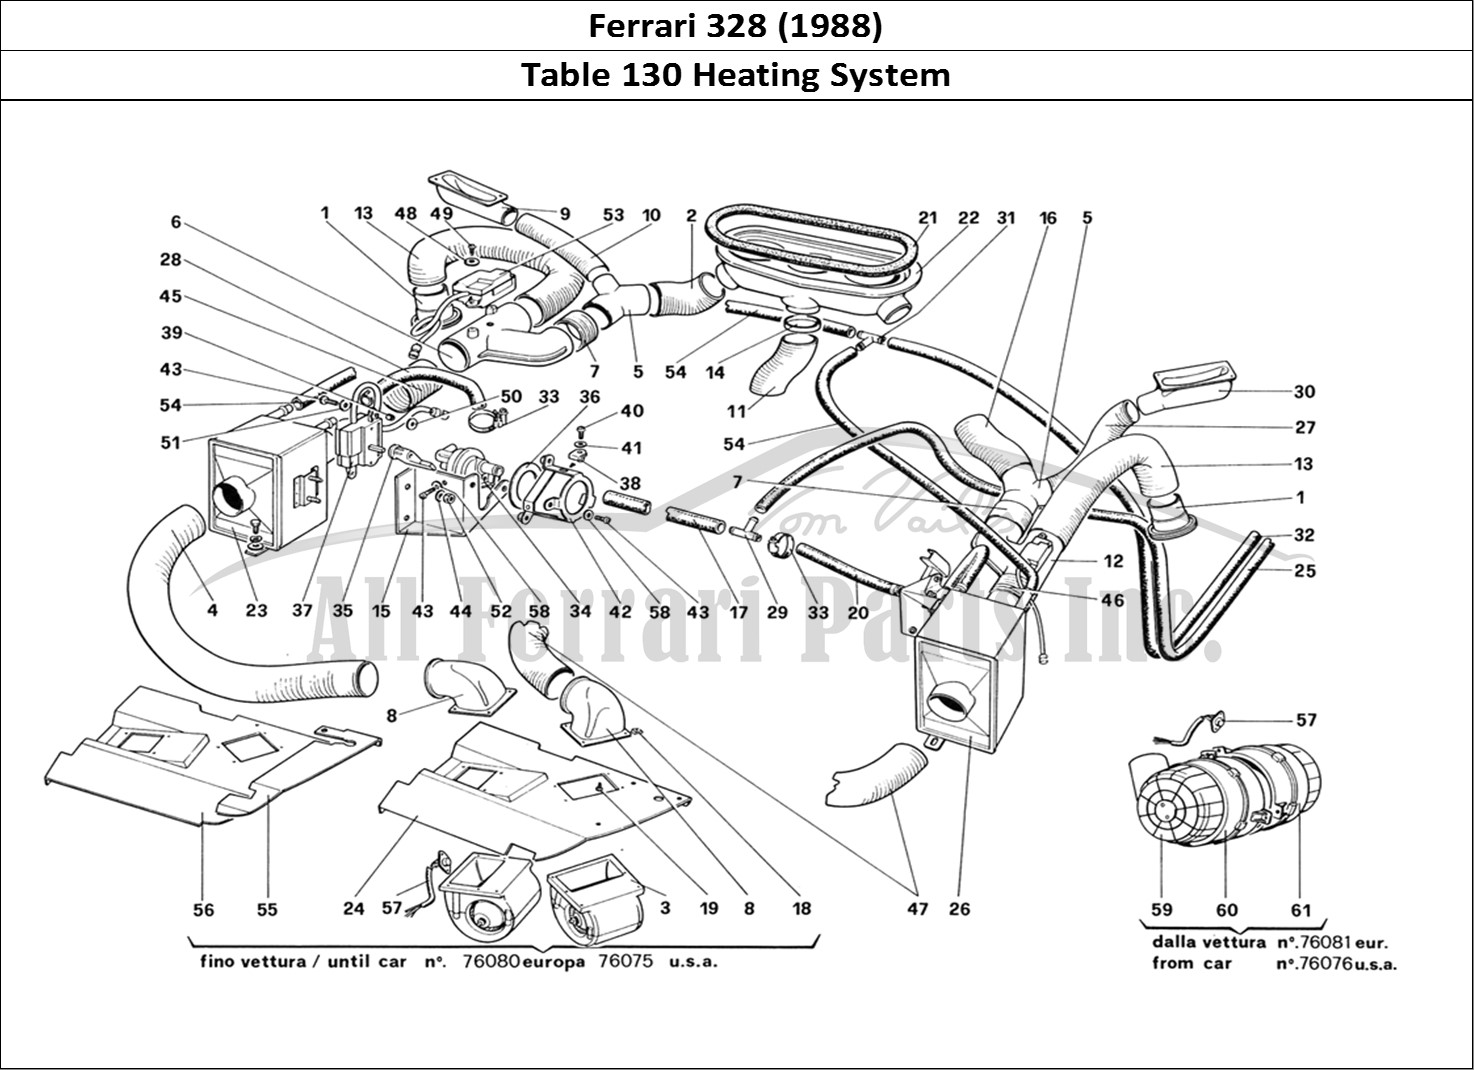 Ferrari Parts Ferrari 328 (1988) Page 130 Heating System